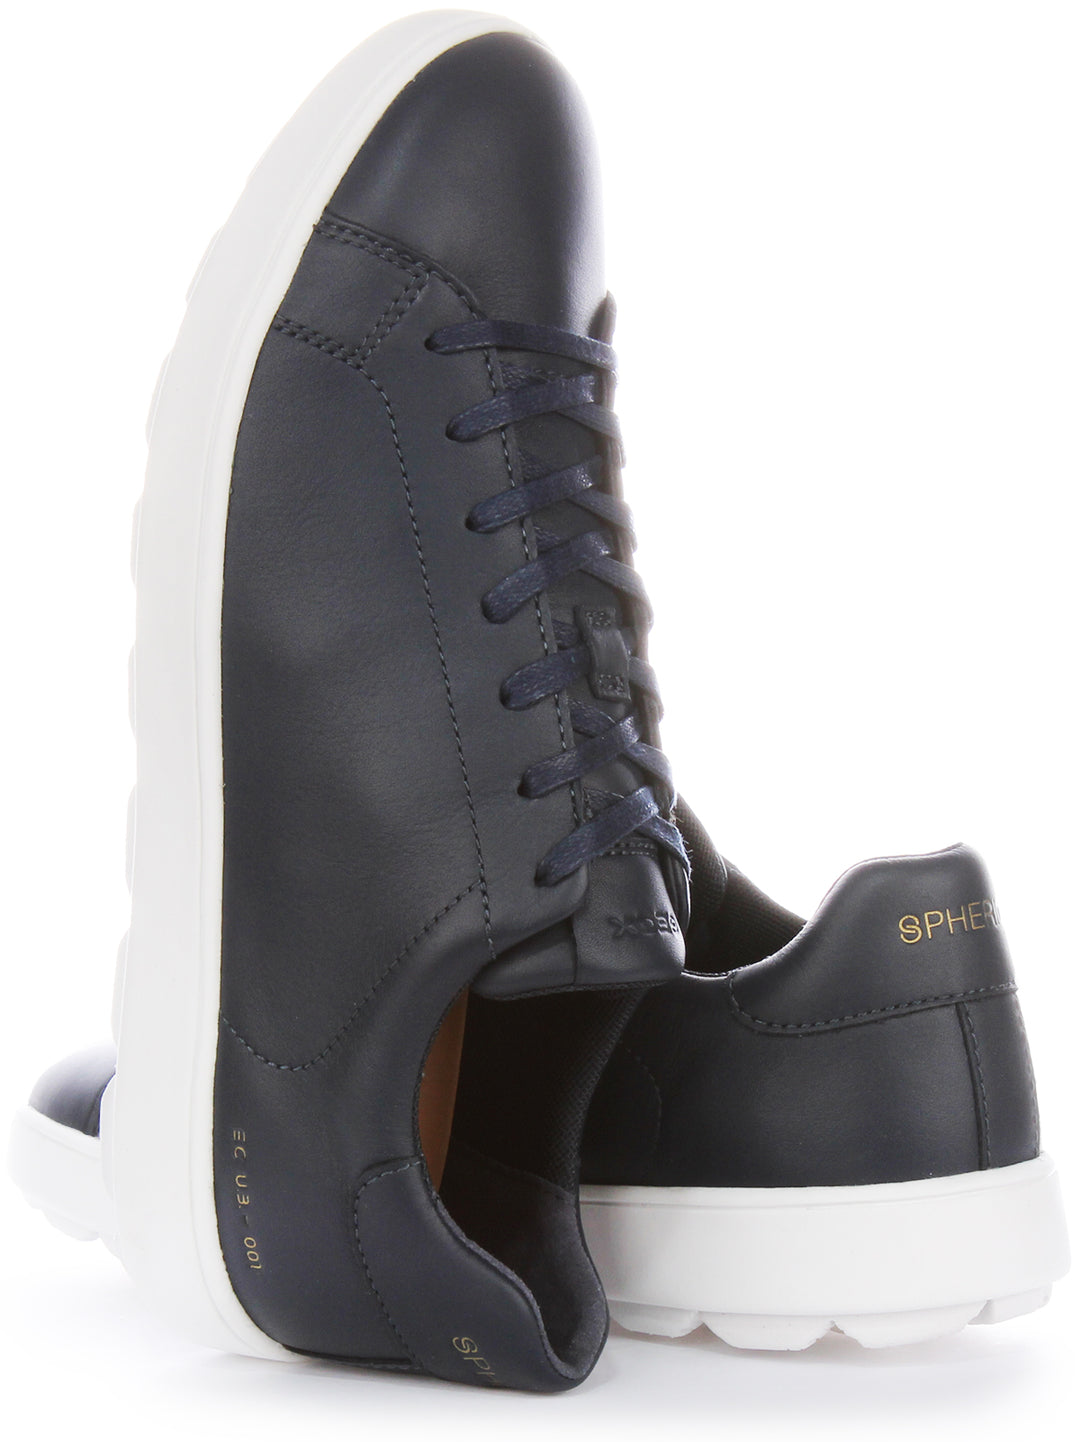 Sneakers in pelle Geox Nappa UL Cushioning Comfort in blu navy e bianco